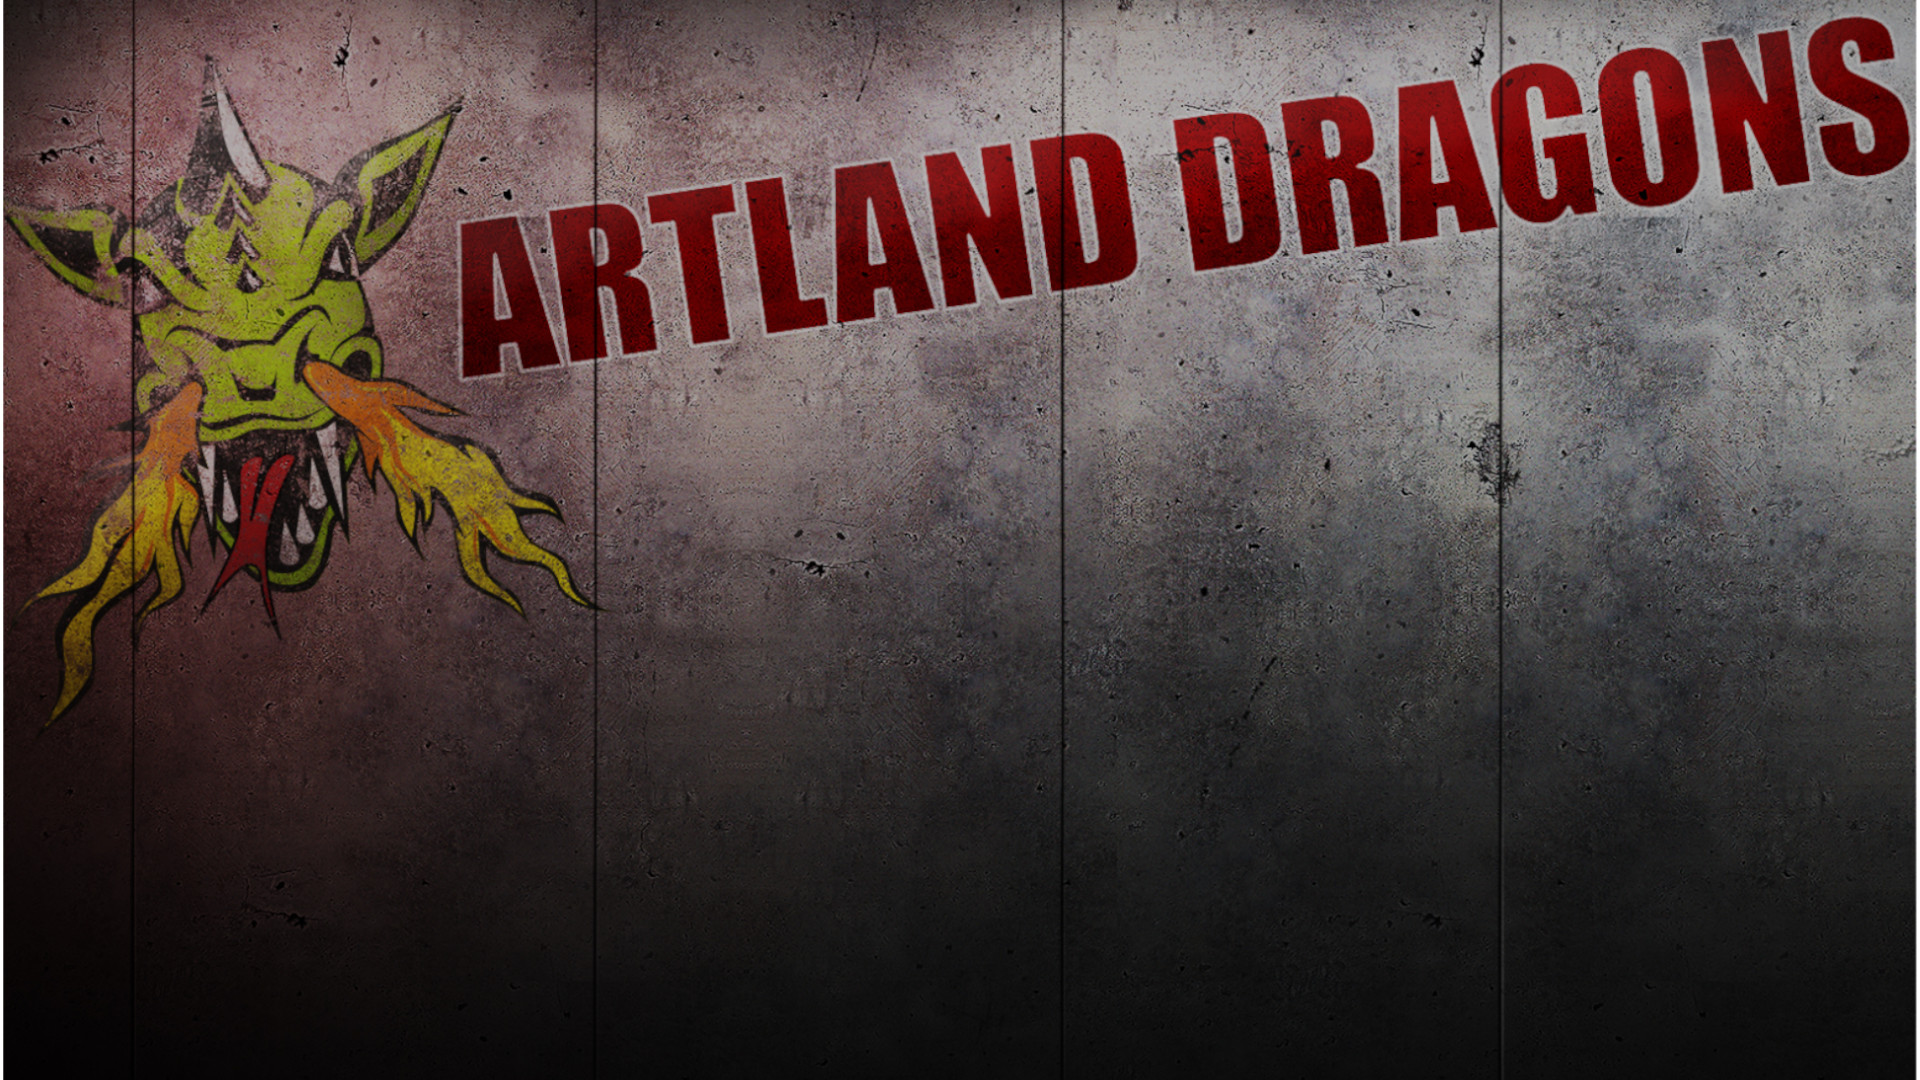 Screen_Artland Dragons